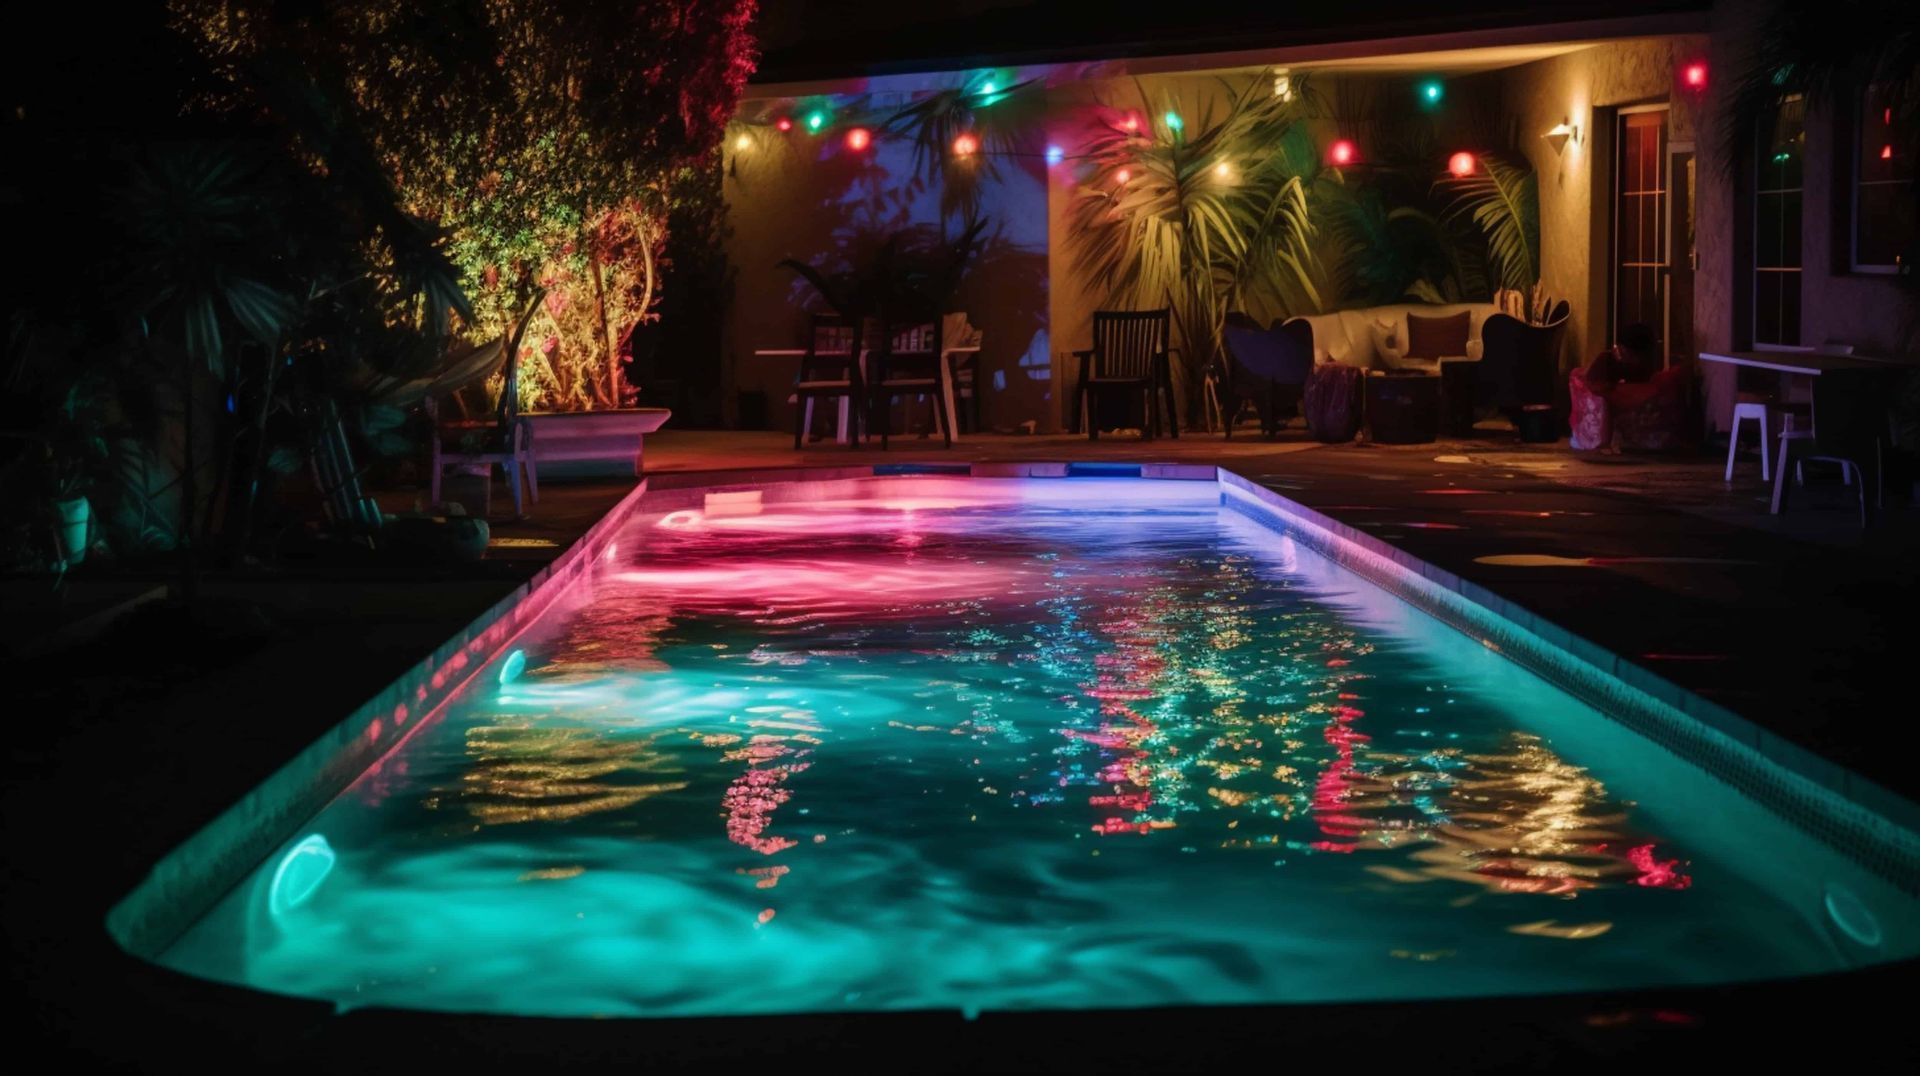 Cool colorful pool LED lighting